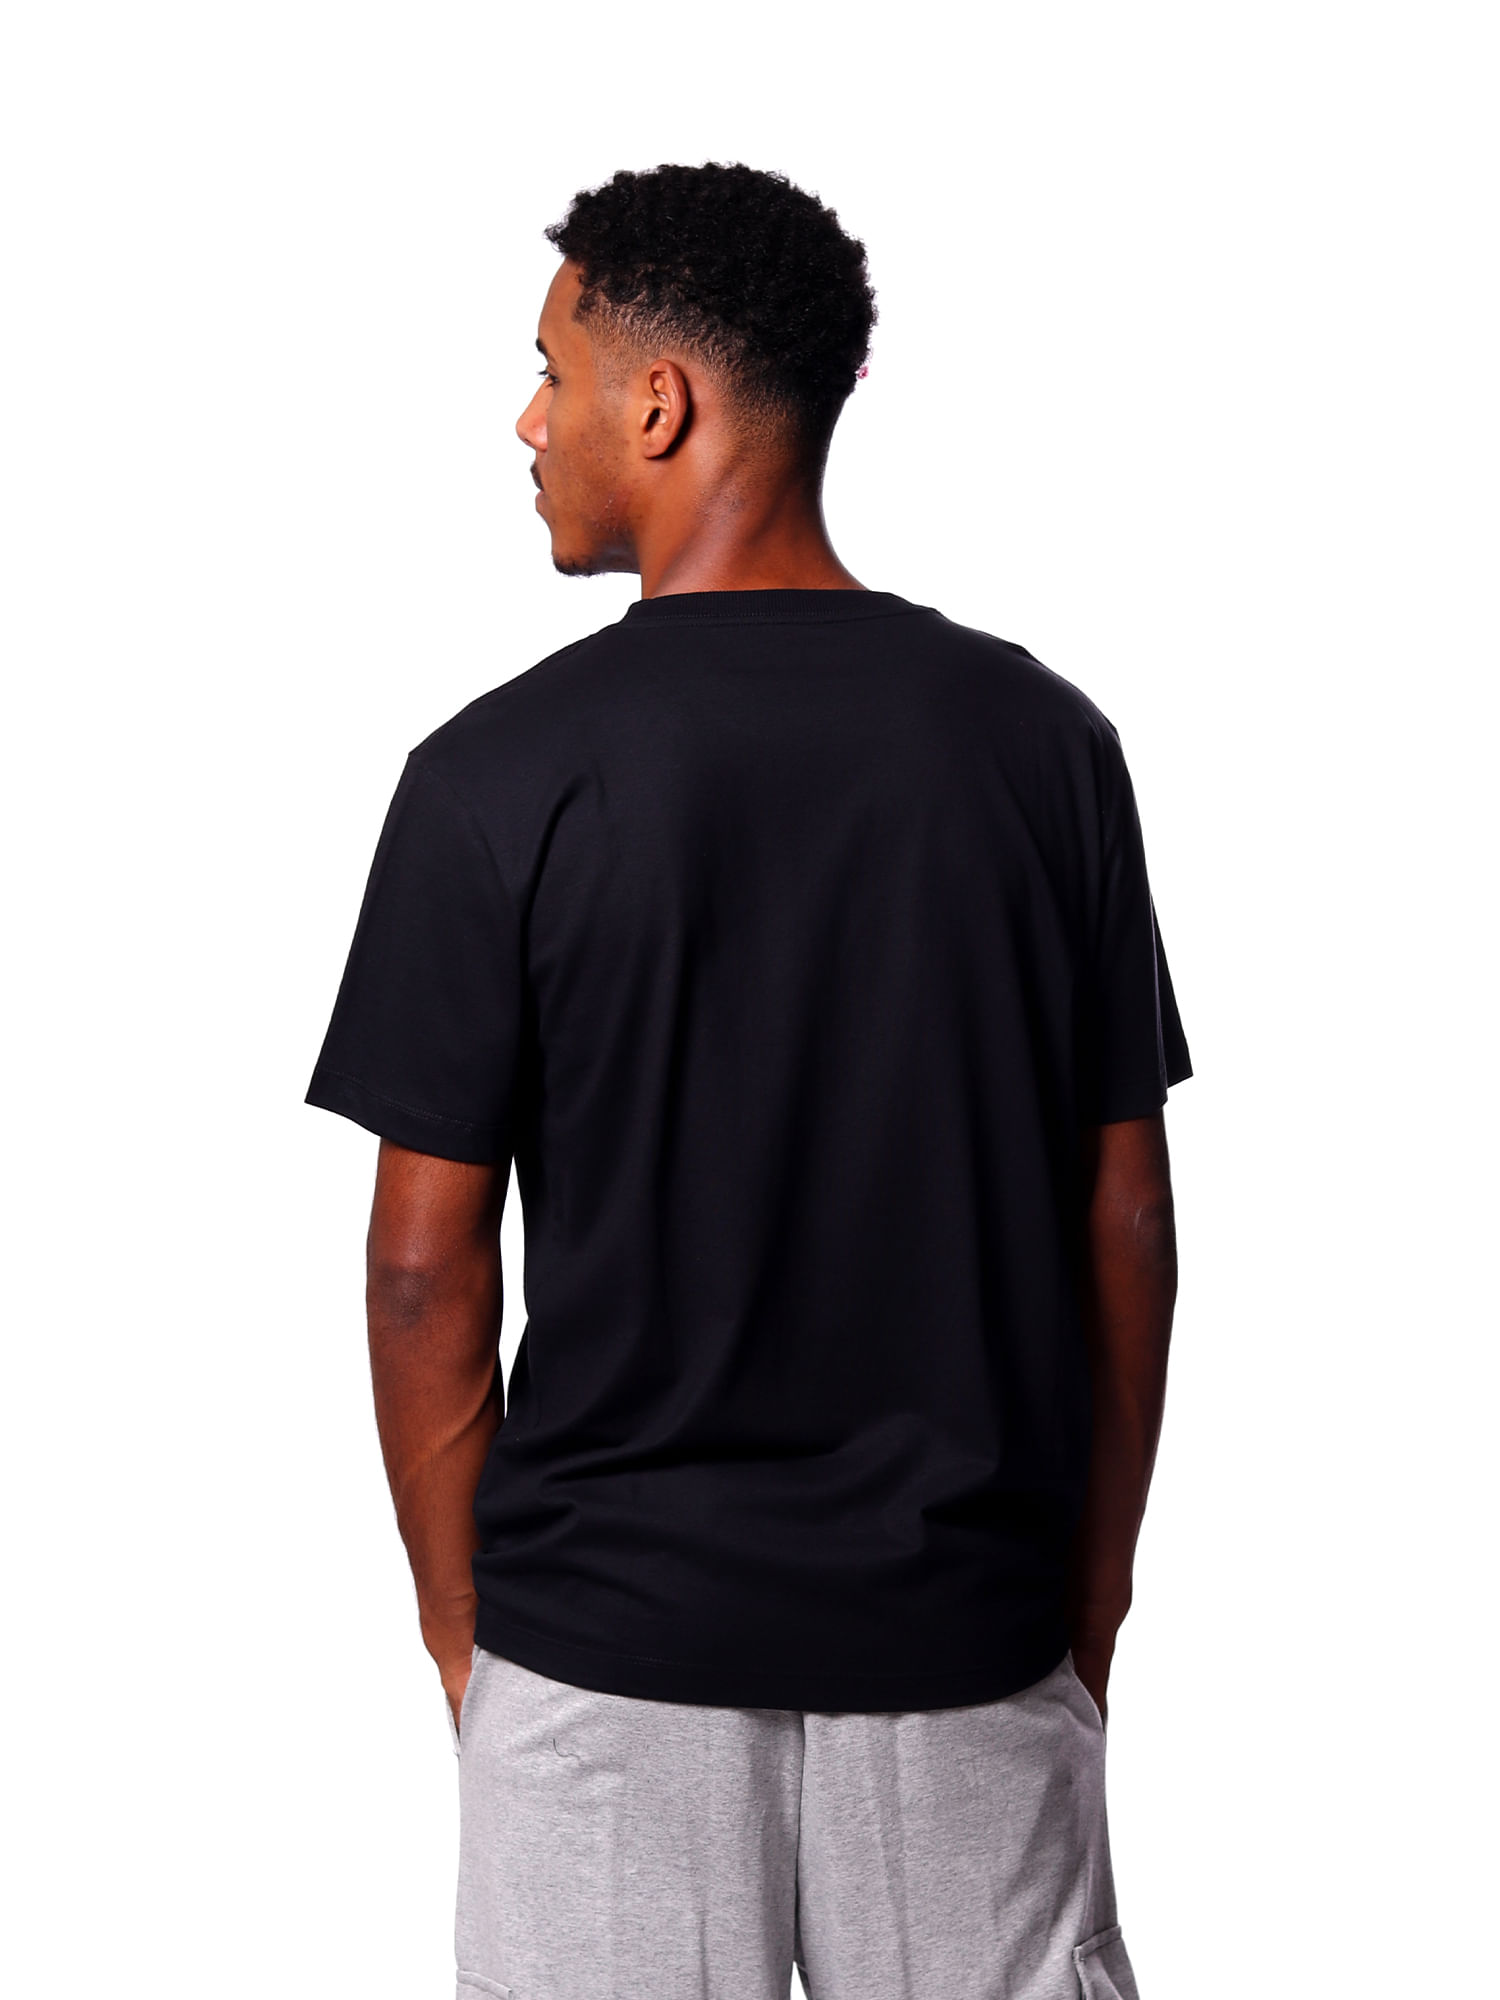 Camiseta-new-era-nba-basic-logo-brooklyn-nets-Preto